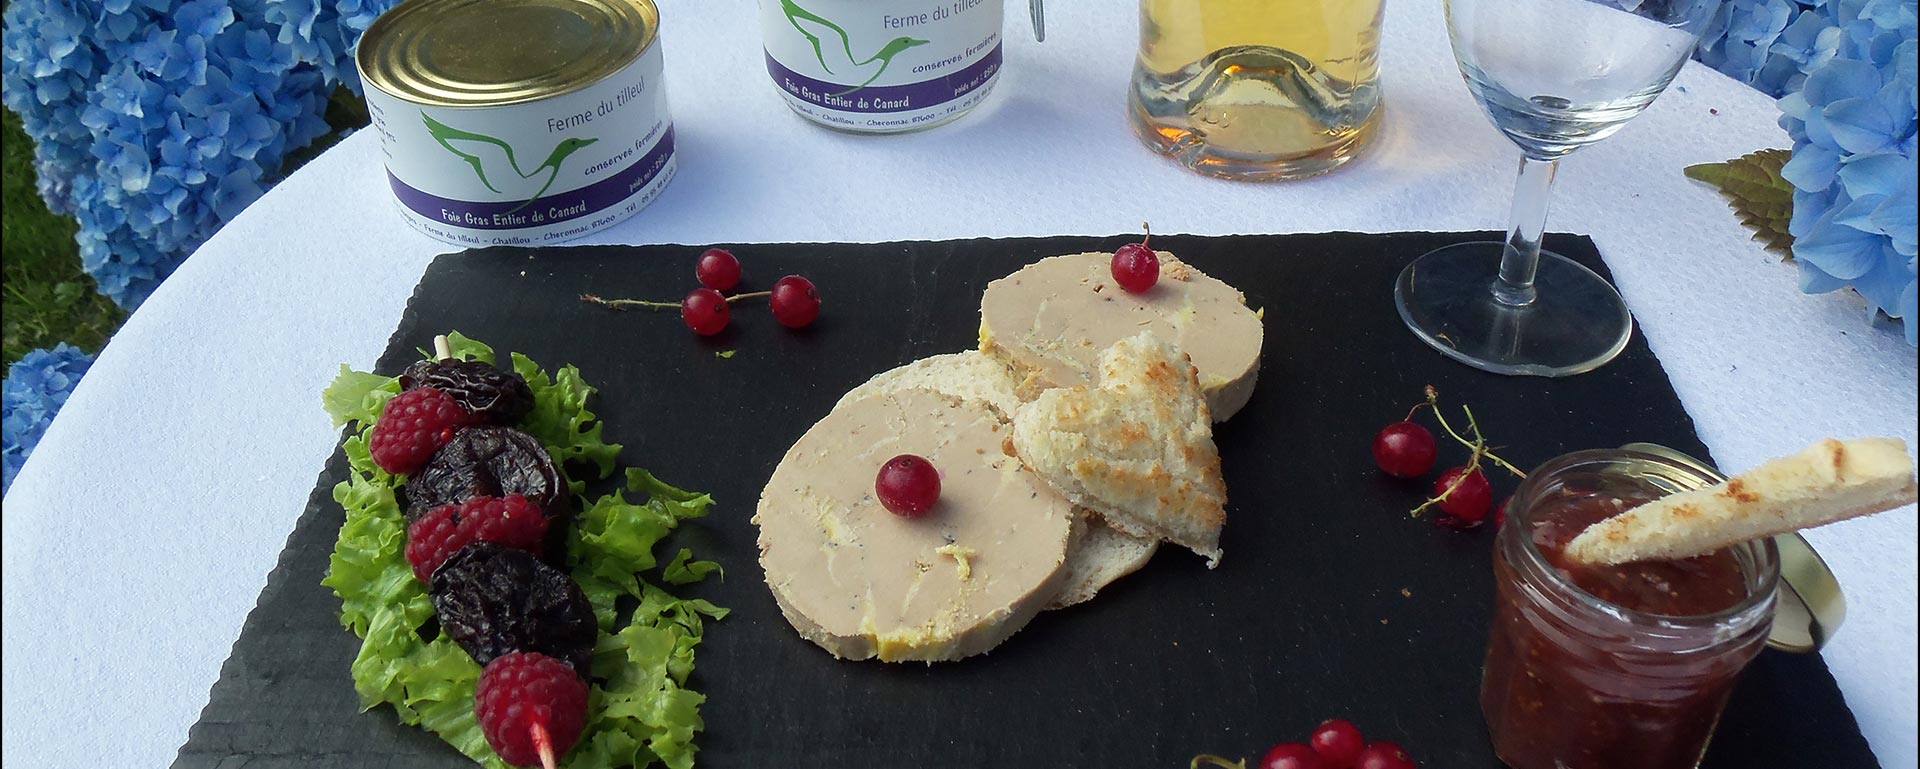 Assiette de foie gras de canard